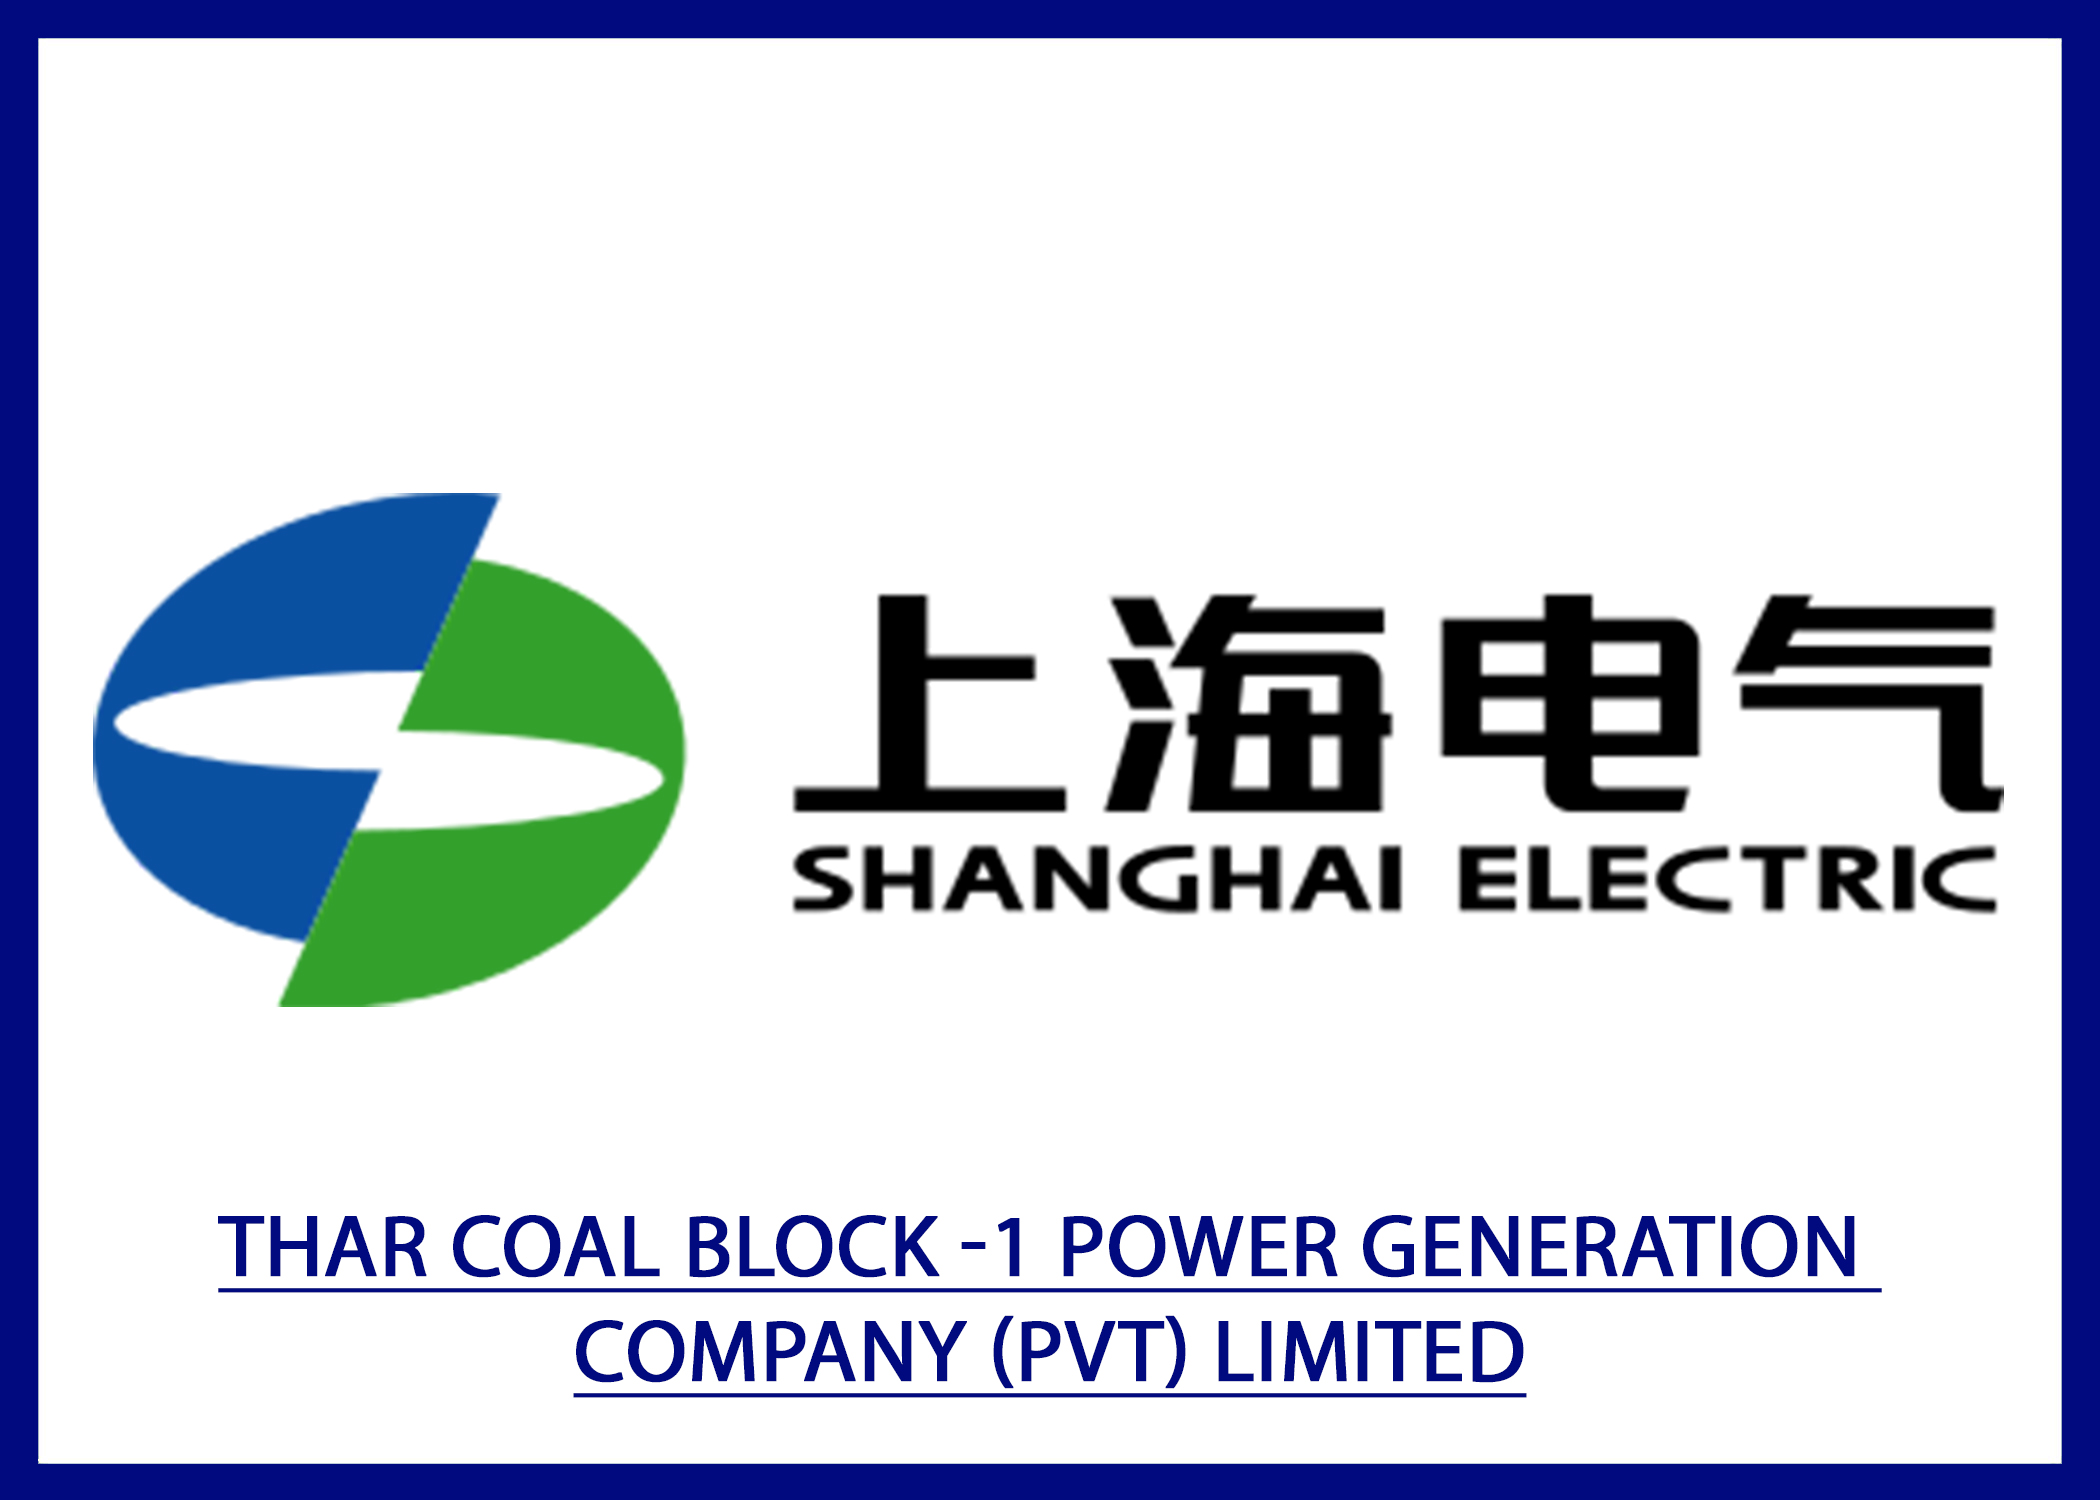 THAR COAL BLOCK -1 POWER GENERATION COMPANY (PVT) LIMITED